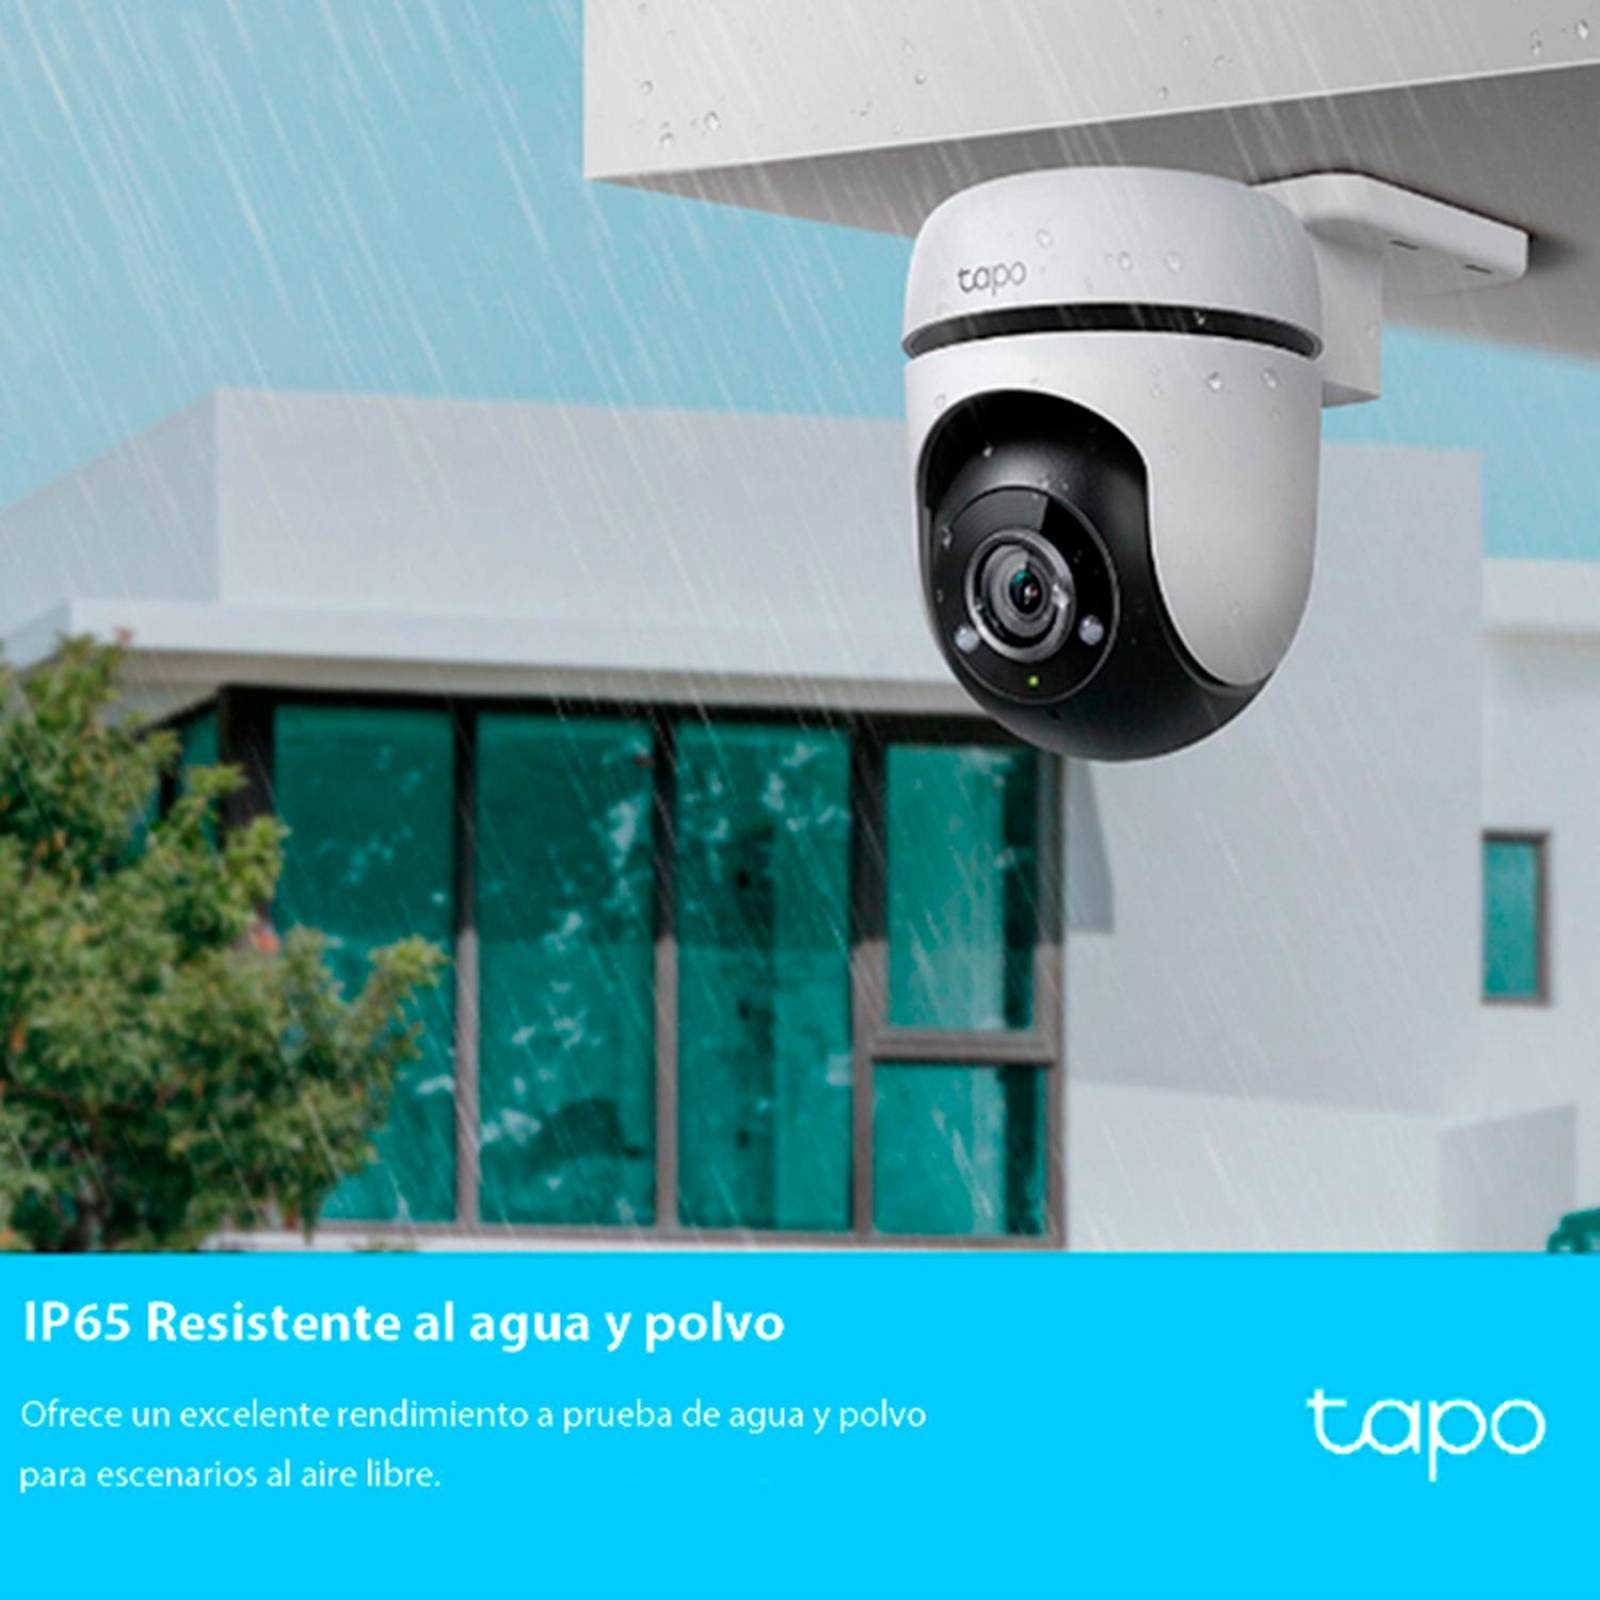 Camara de Seguridad / Vigilancia Exterior TP-Link Tapo C500 Full